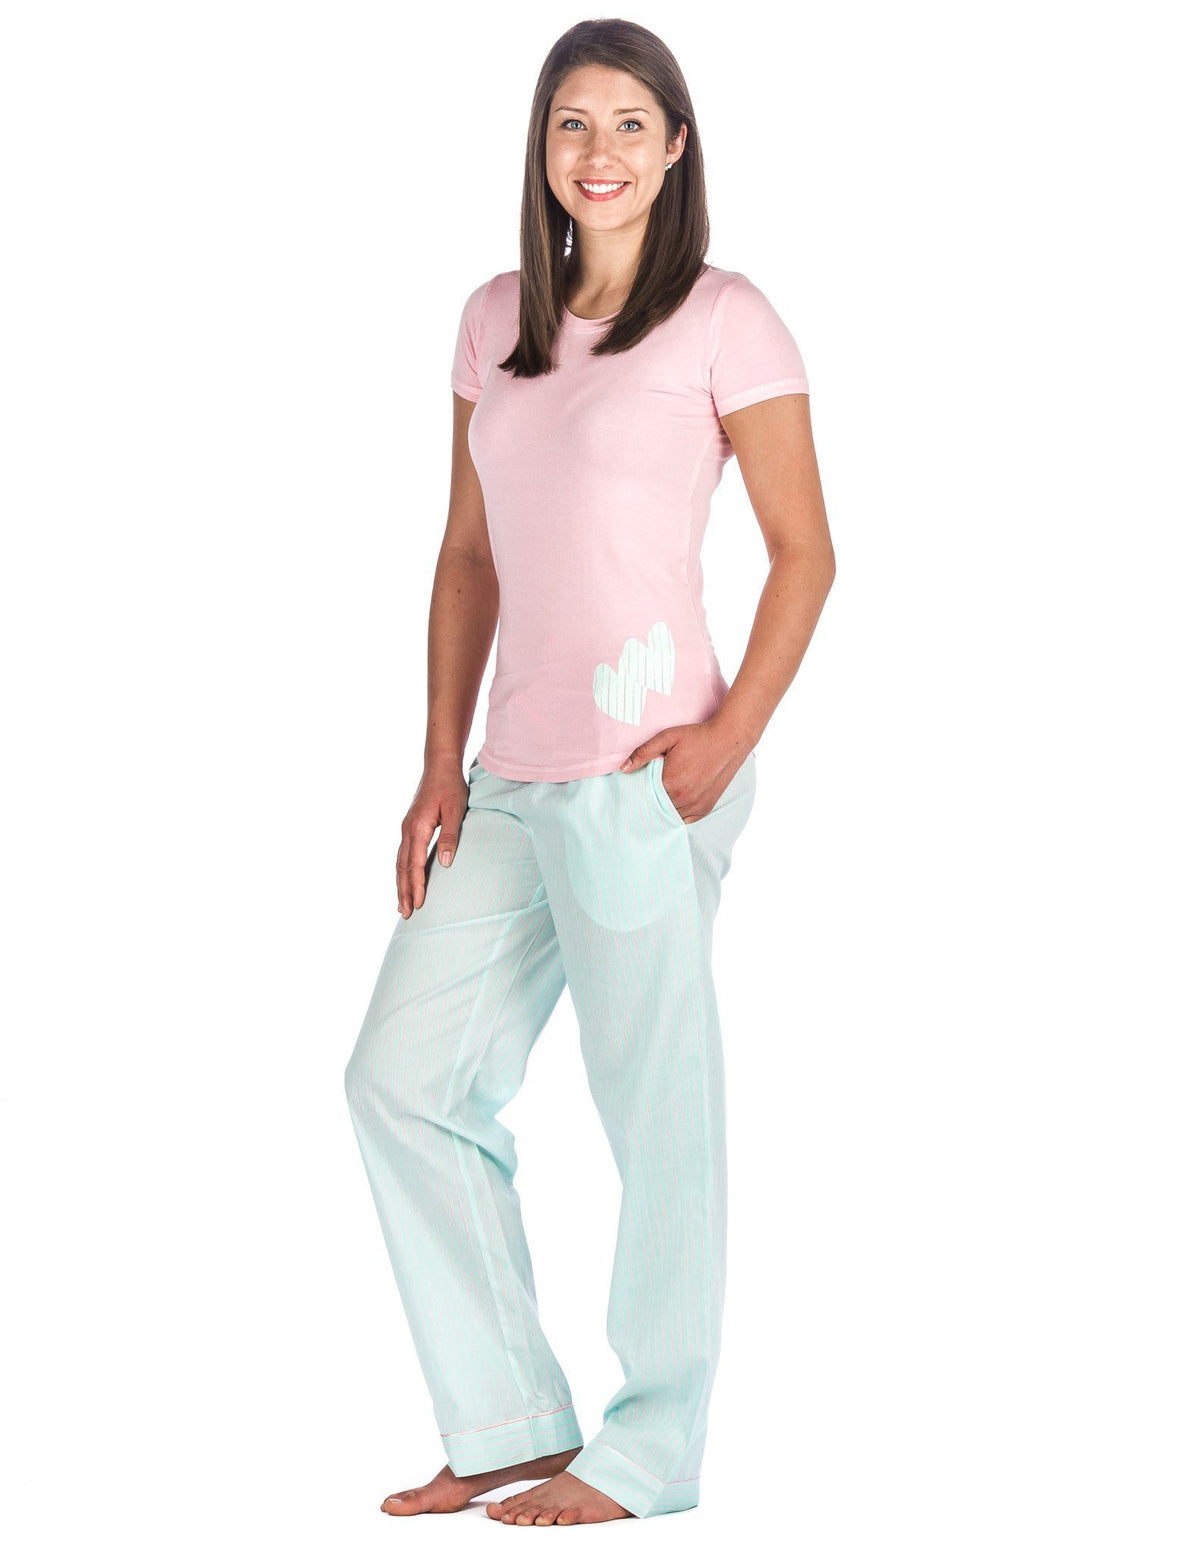 Women's Premium Cotton Poplin Lounge/Sleepwear Set - Free Stripe - Aqua/Pink